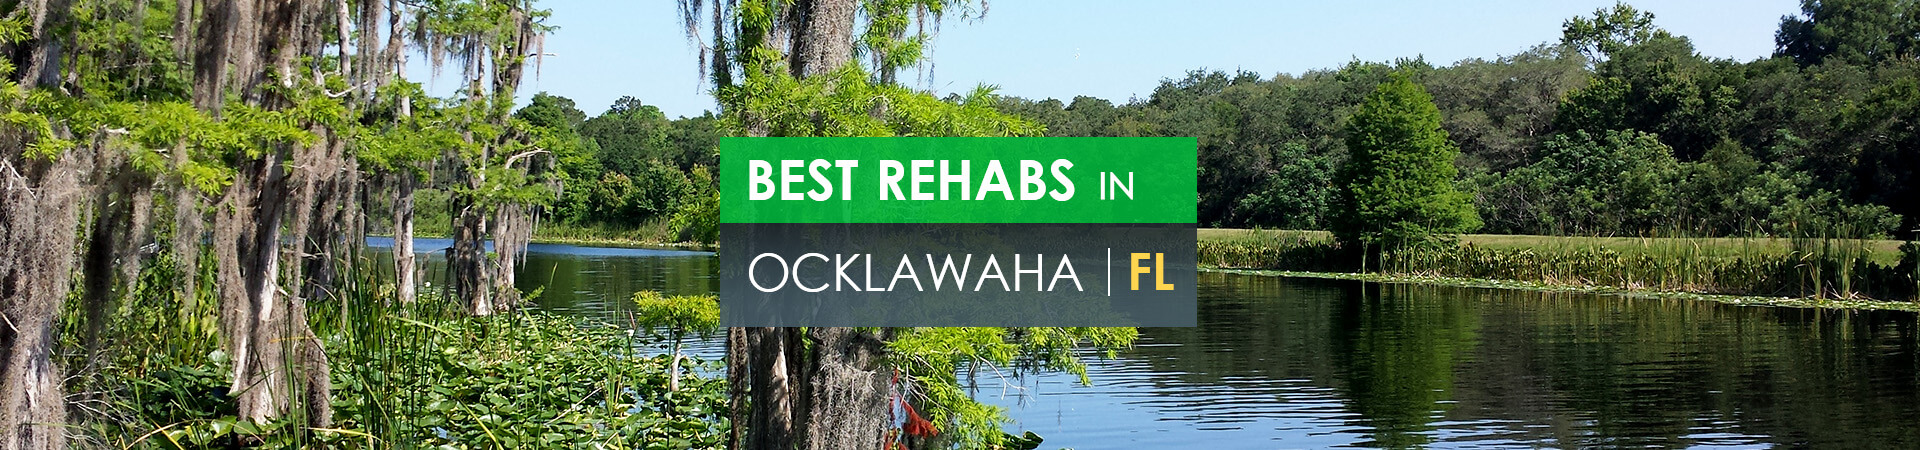 Best rehabs in Ocklawaha, FL